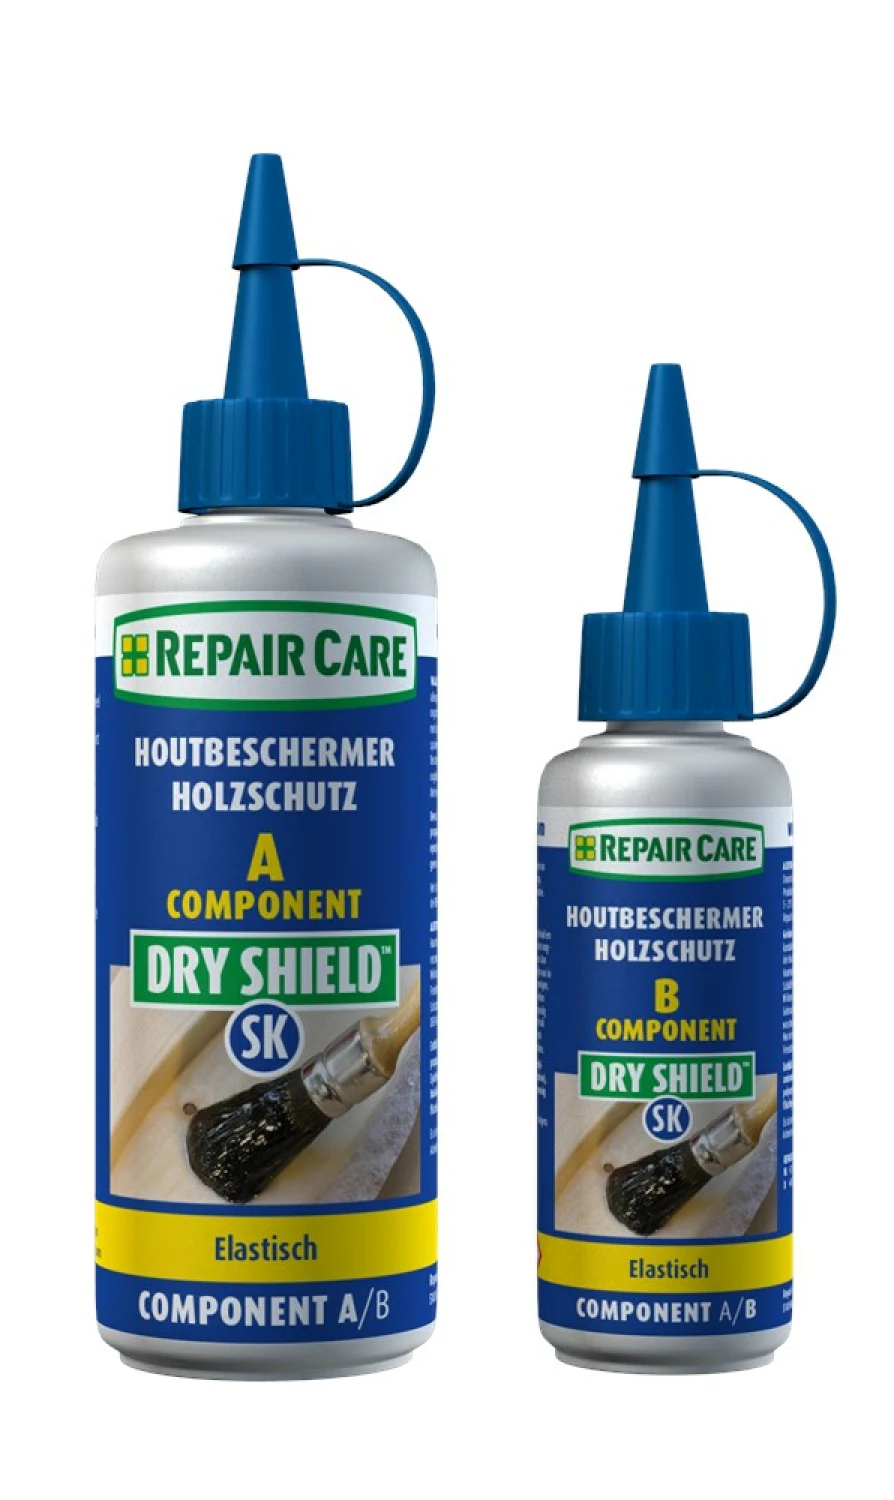 Repair Care Dry Shield 2031001 Houtbeschermer SK